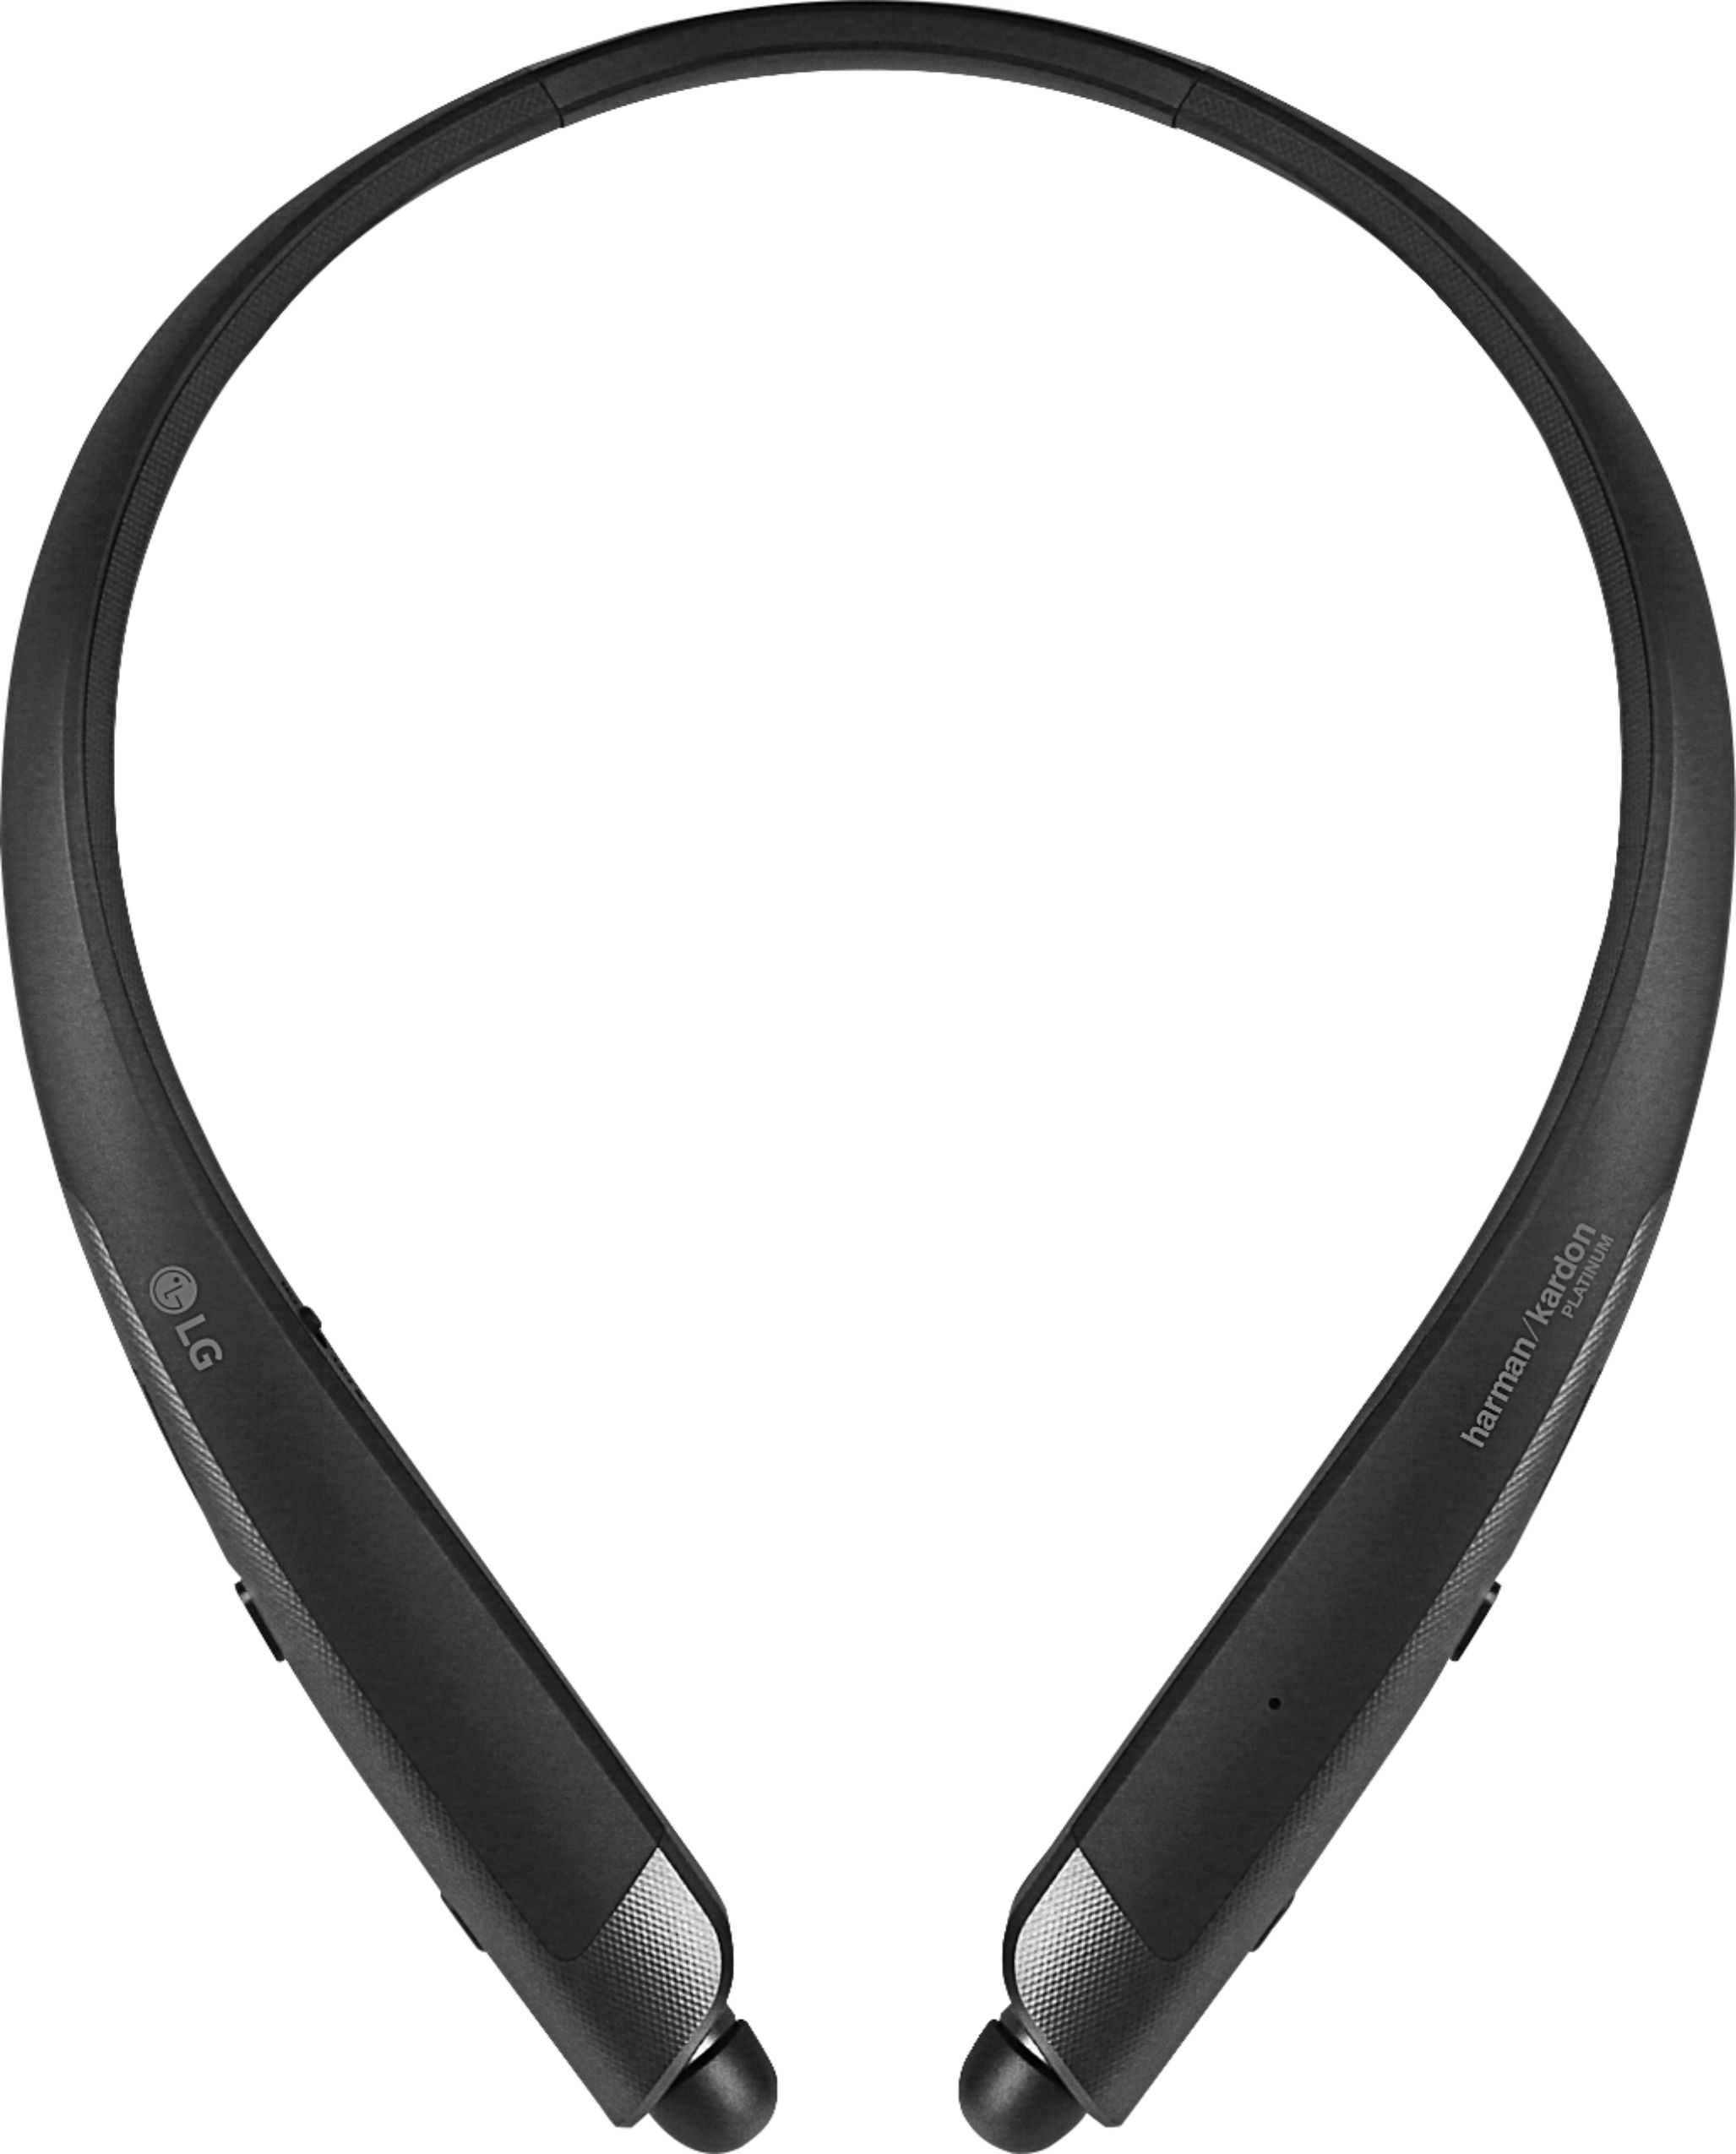 LG - Geek Squad Certified Refurbished TONE PLATINUM+ Bluetooth Headset - Black